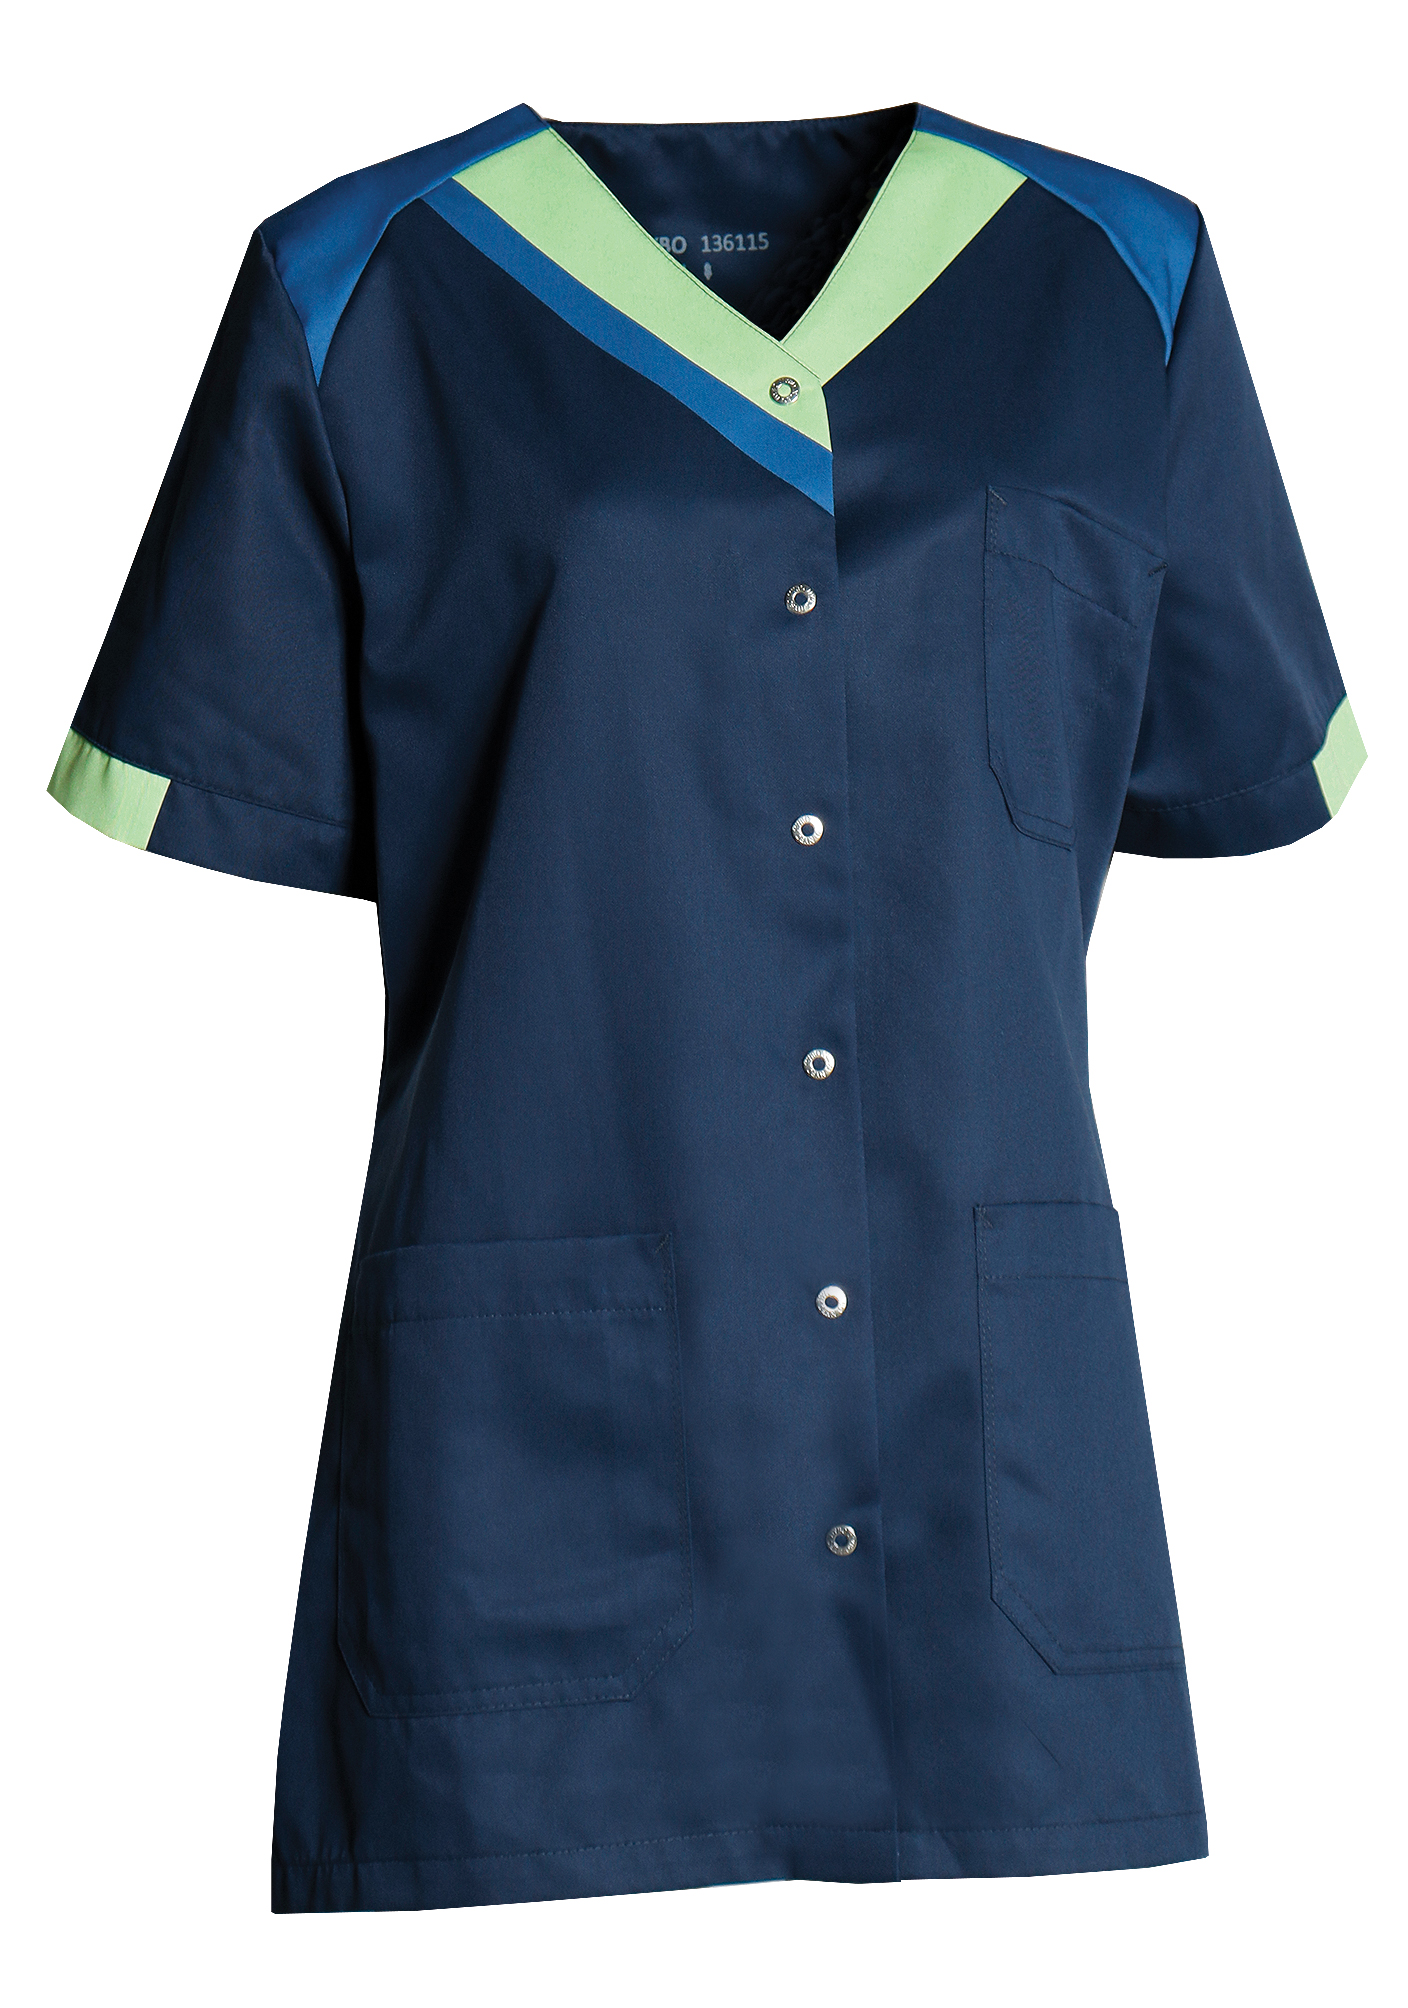 Navy/Light Green/Blue Ladies’ tunic, Nova Premium (1361151)